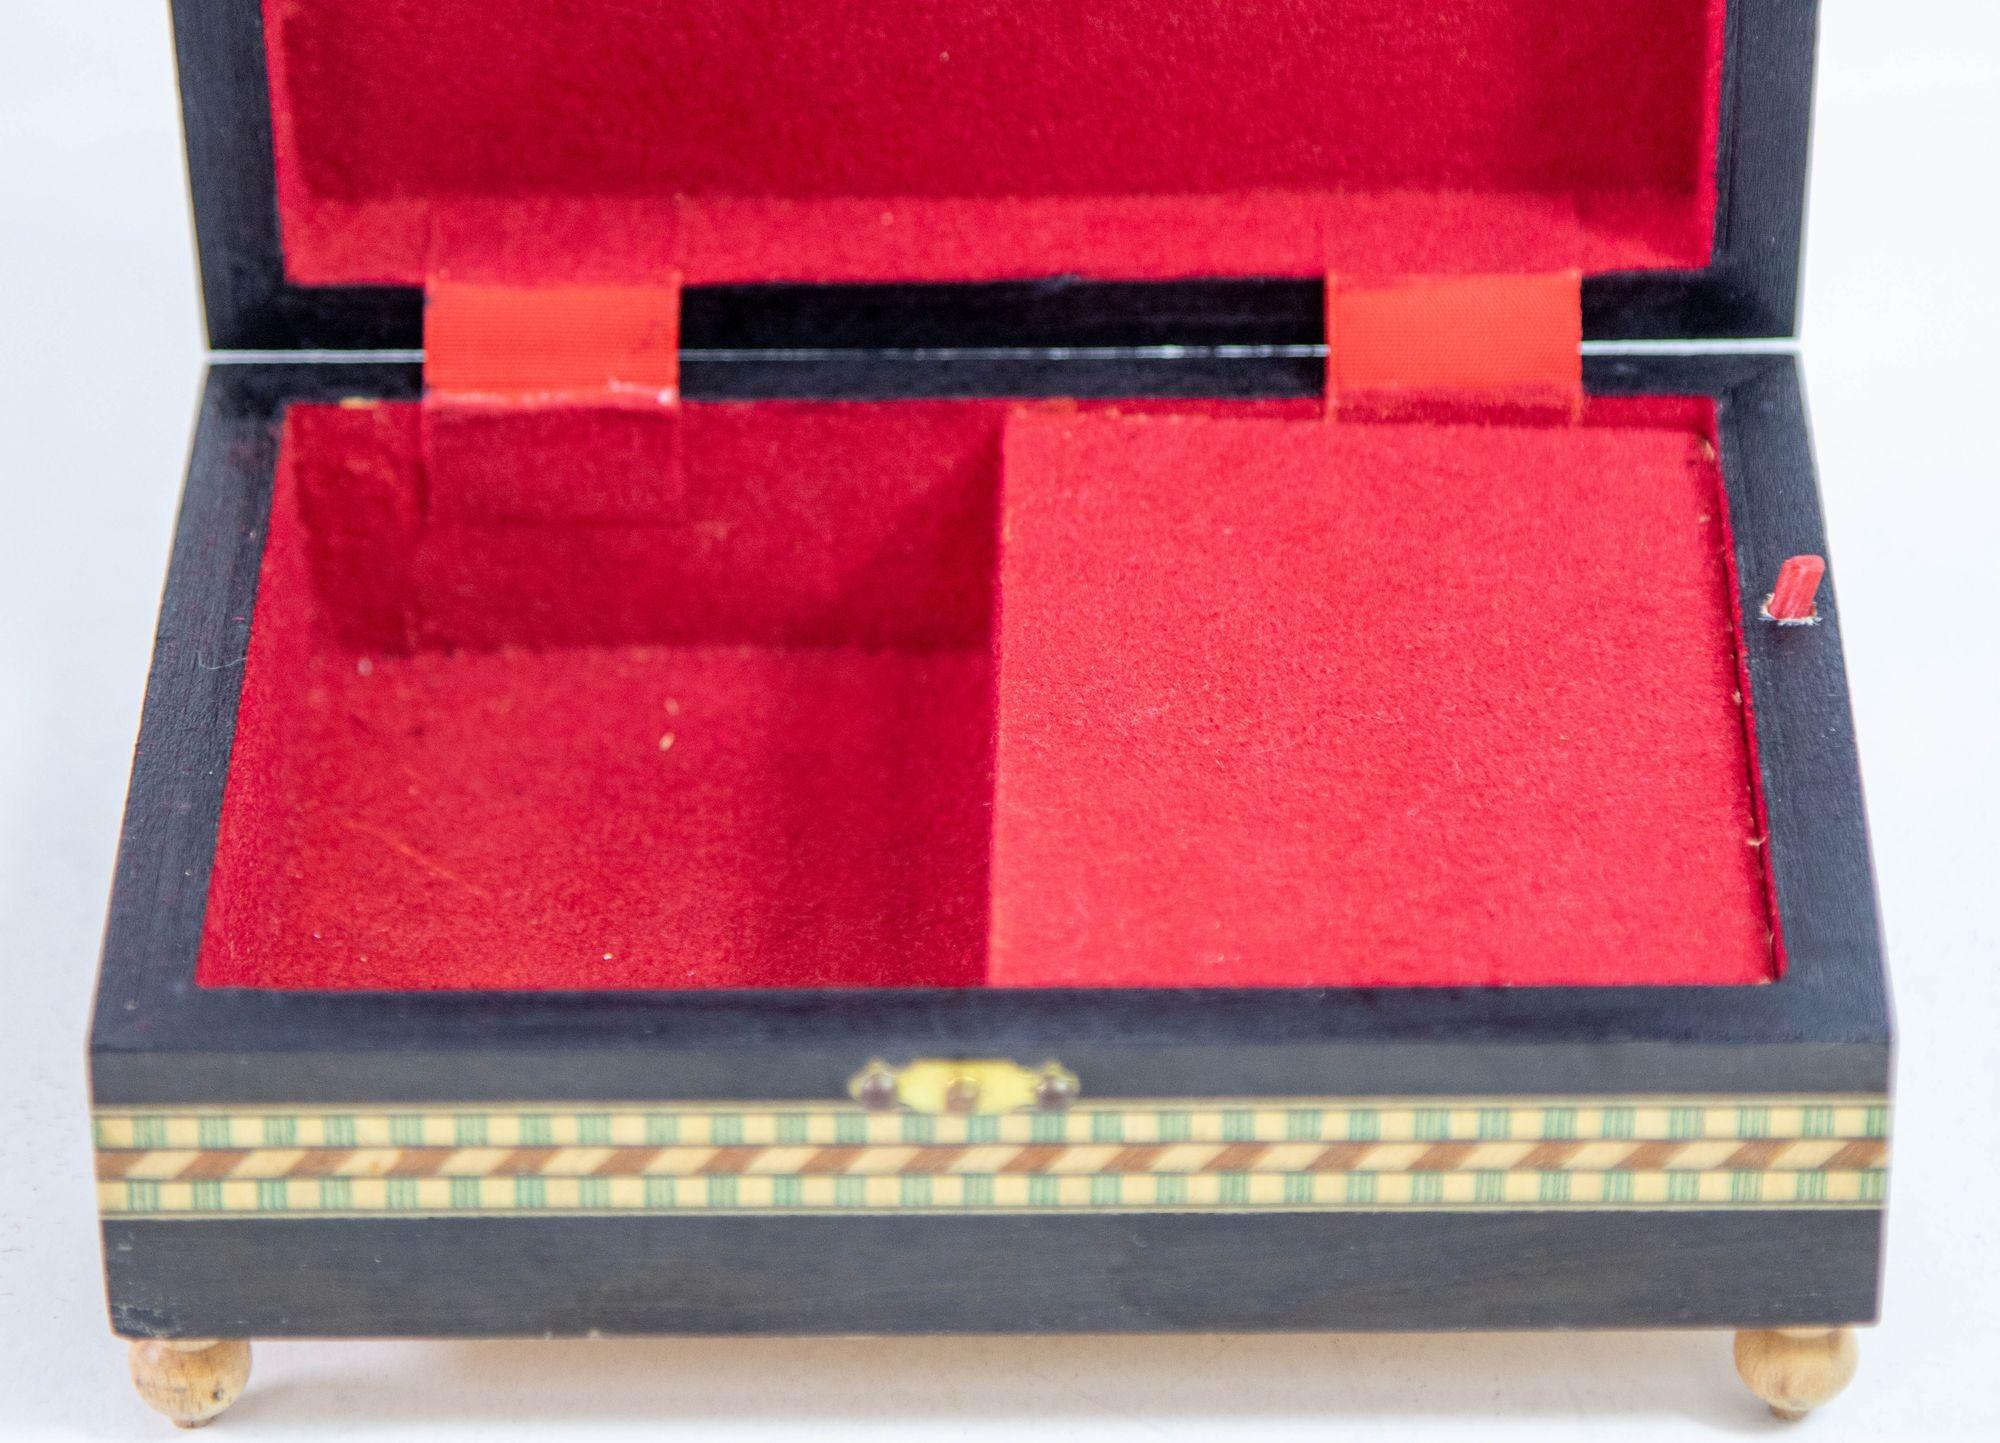 Fruitwood Granada Moorish Spain Inlaid Marquetry Jewelry Music Box For Sale